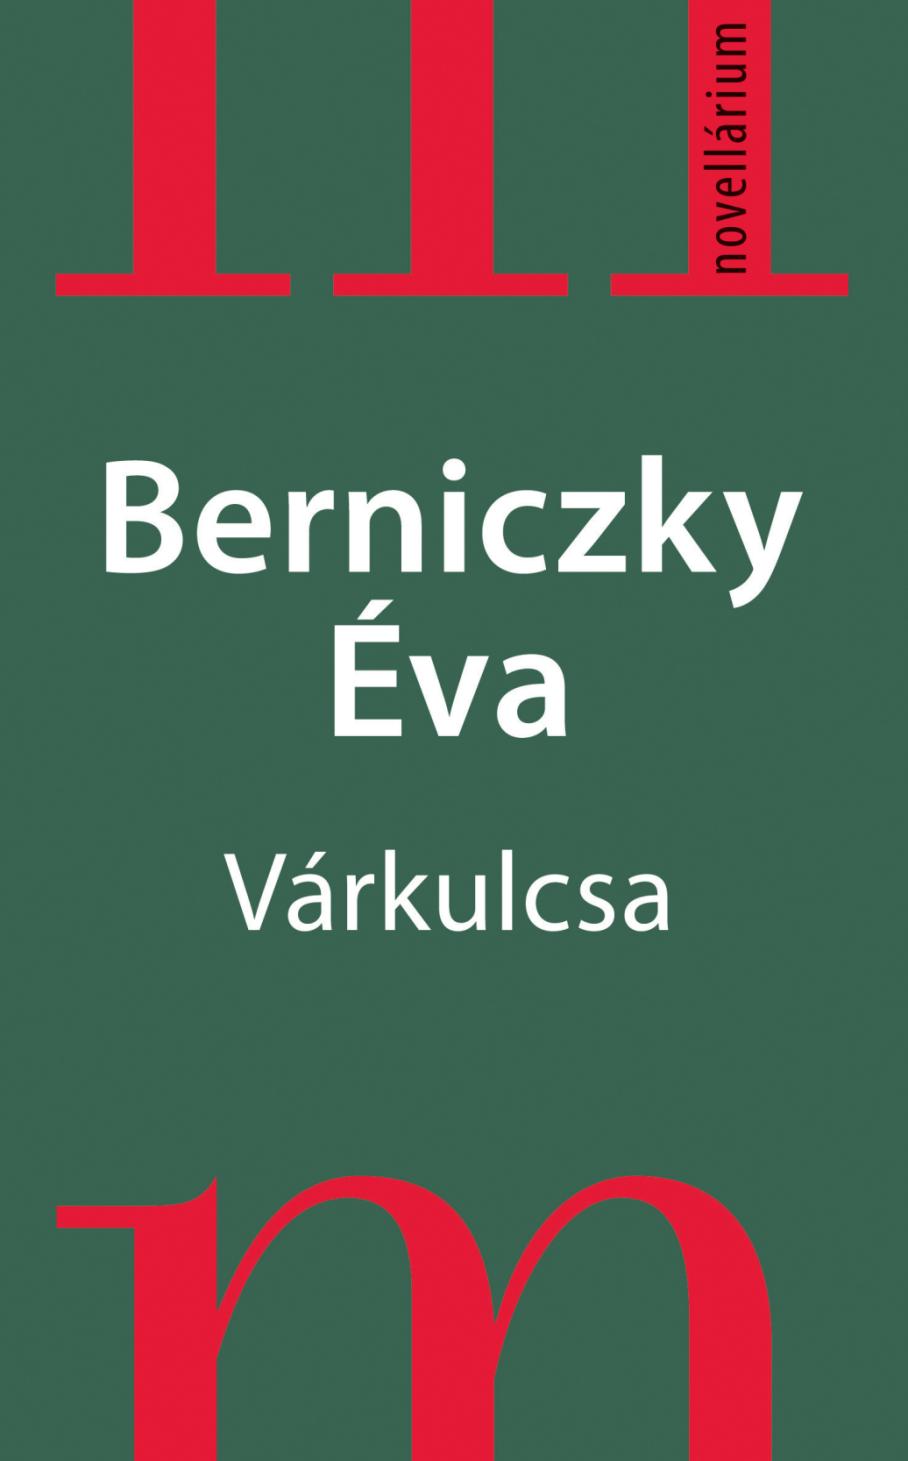 Berniczky Éva - Várkulcsa